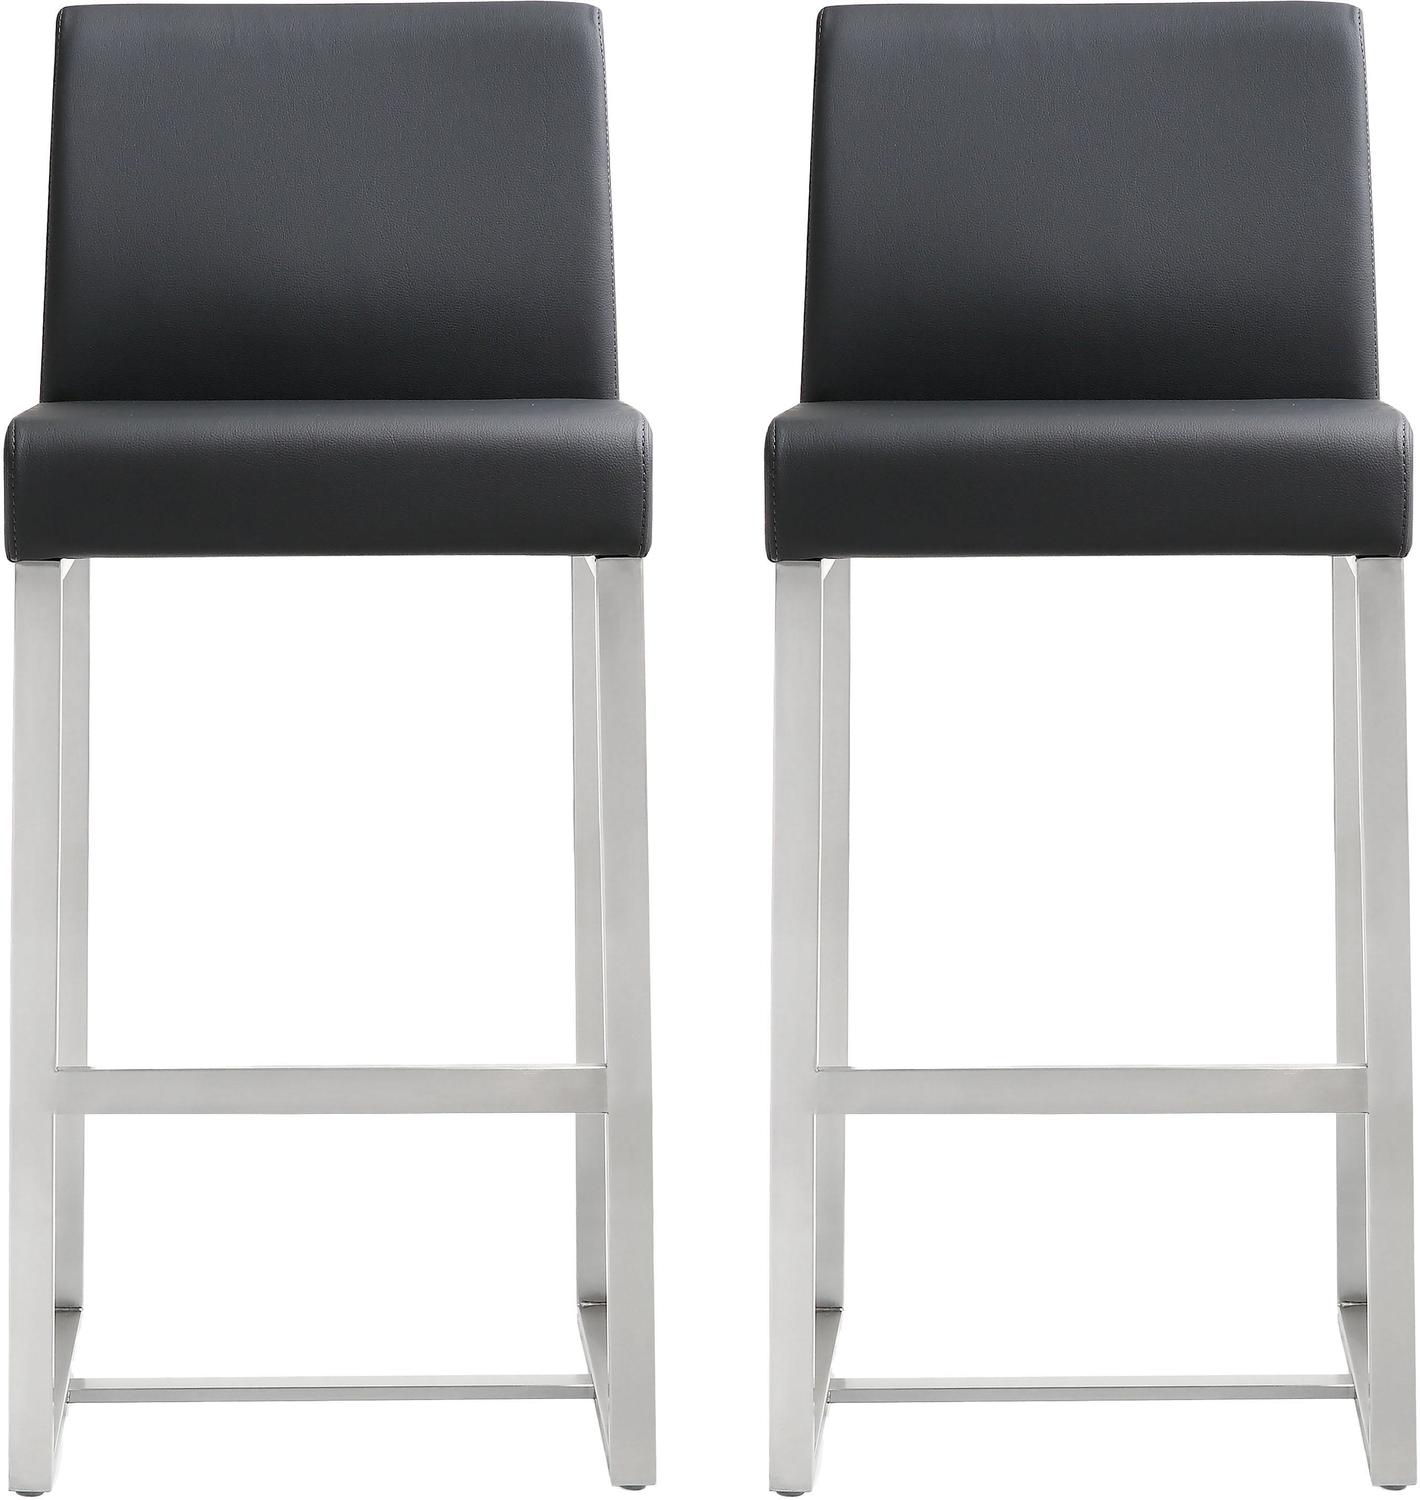 bar stool adalah Contemporary Design Furniture Stools Black